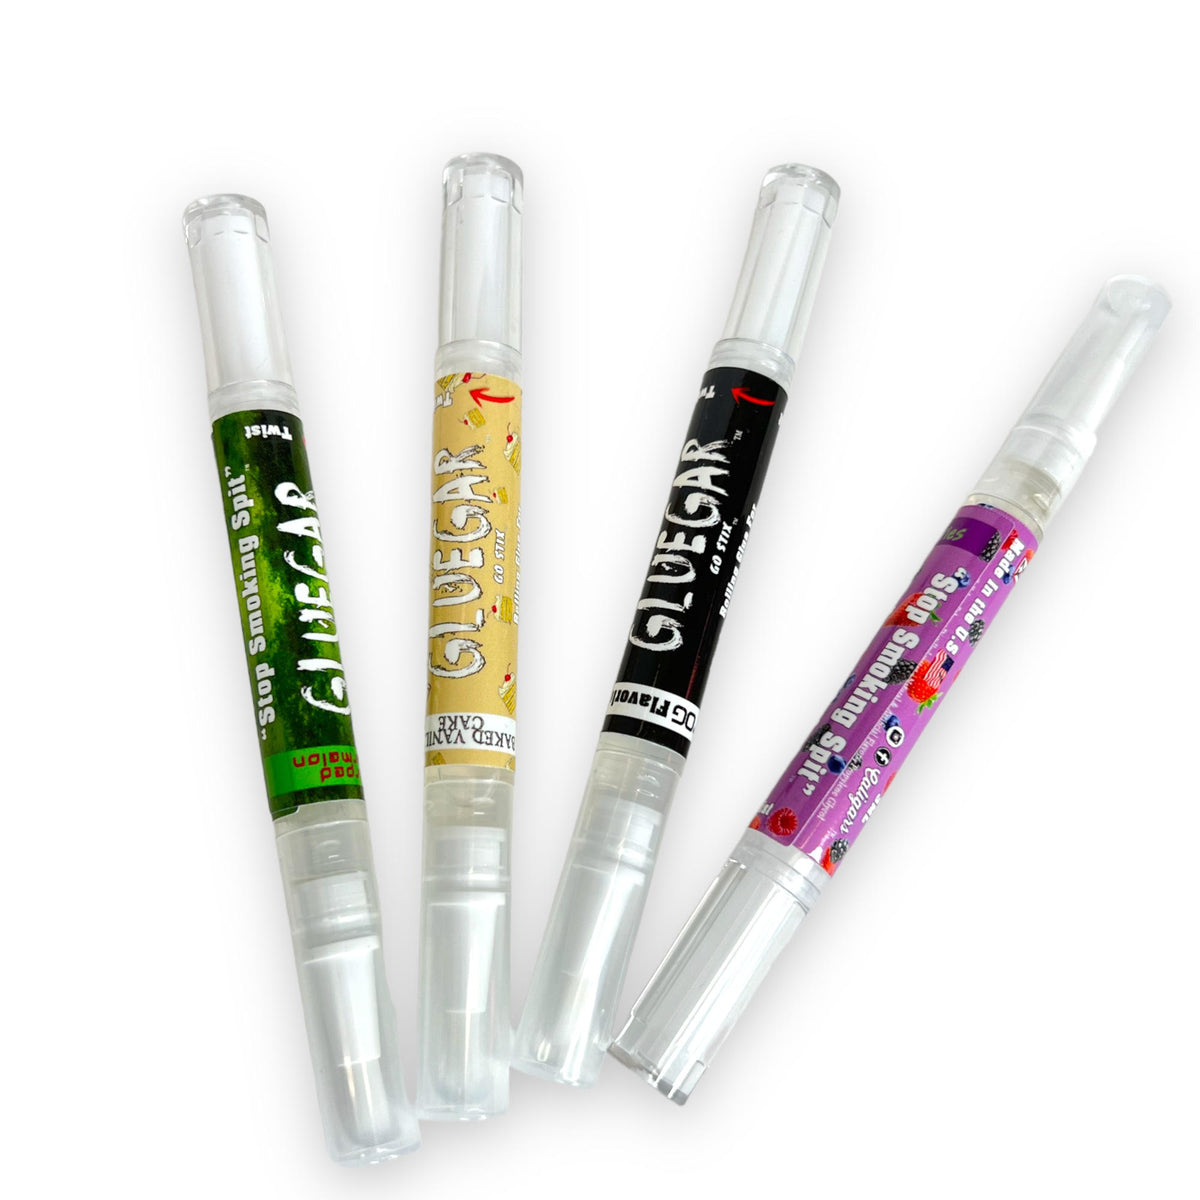 Gluegar Pen Multiple Flavors